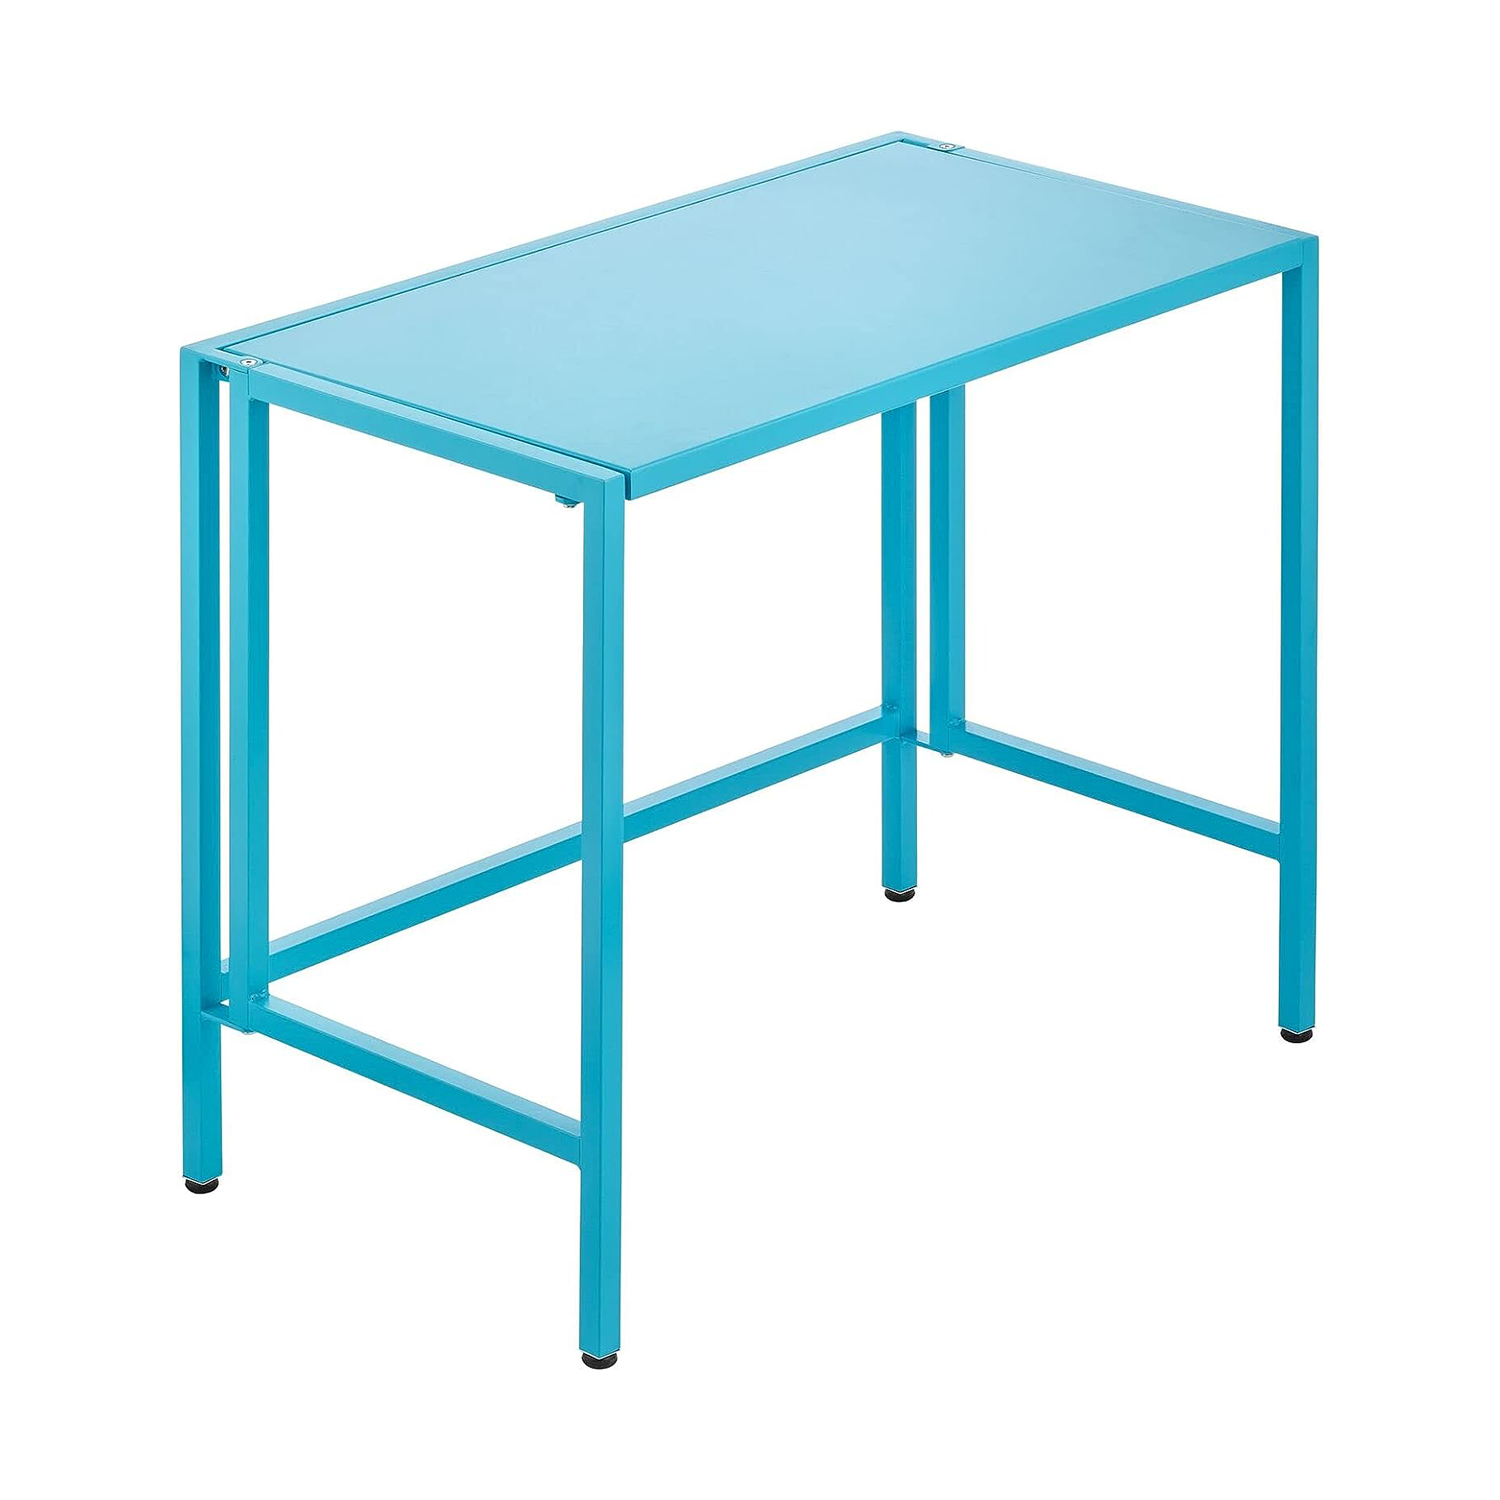 mdesign folding desk in blue